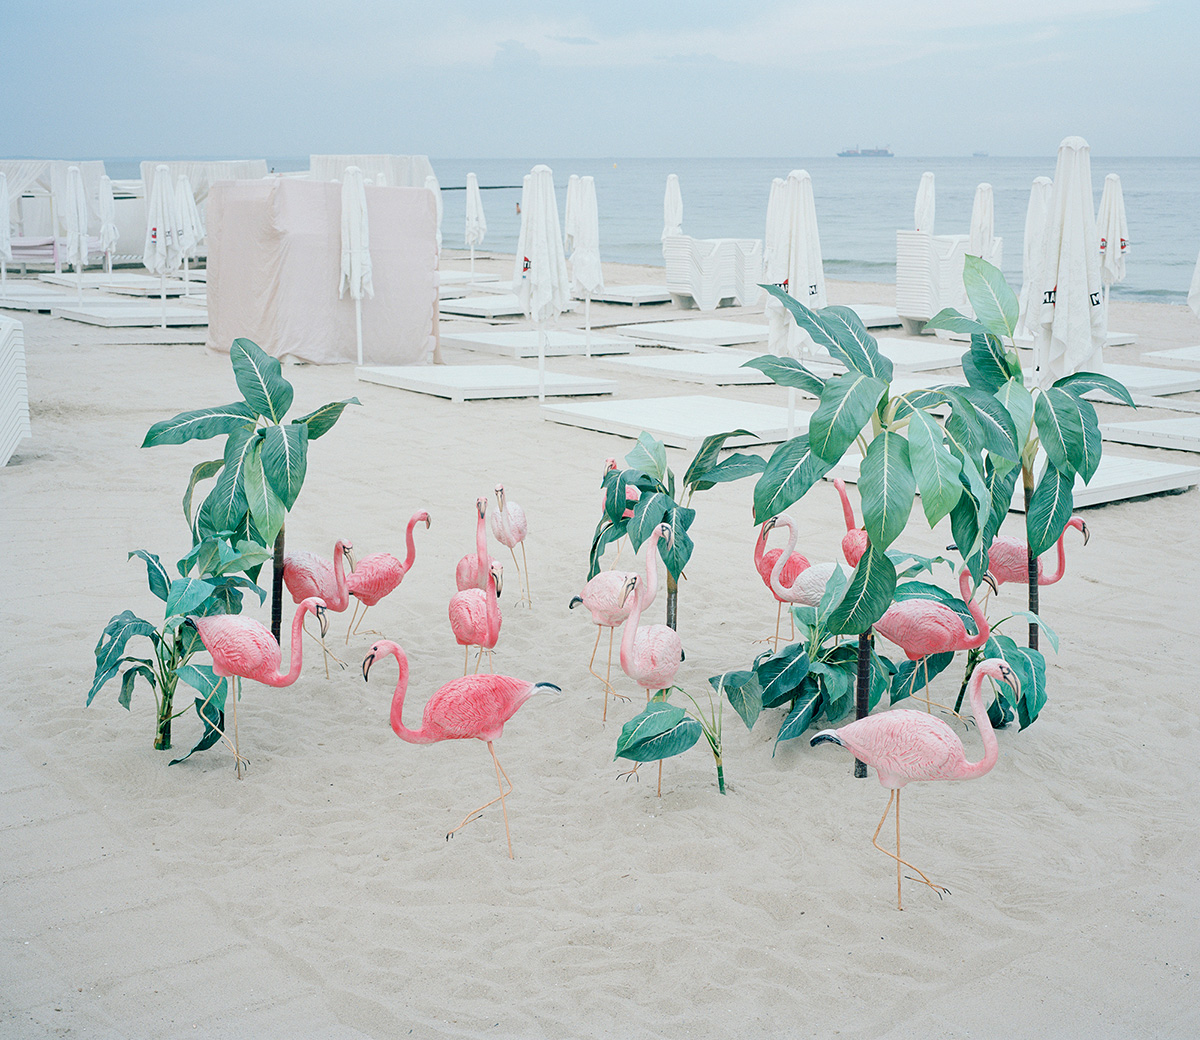 "Rest Behind the Curtain" pelo fotógrafo Michal Solarski TESTES A&c Flamingos Rest Behind Curtain